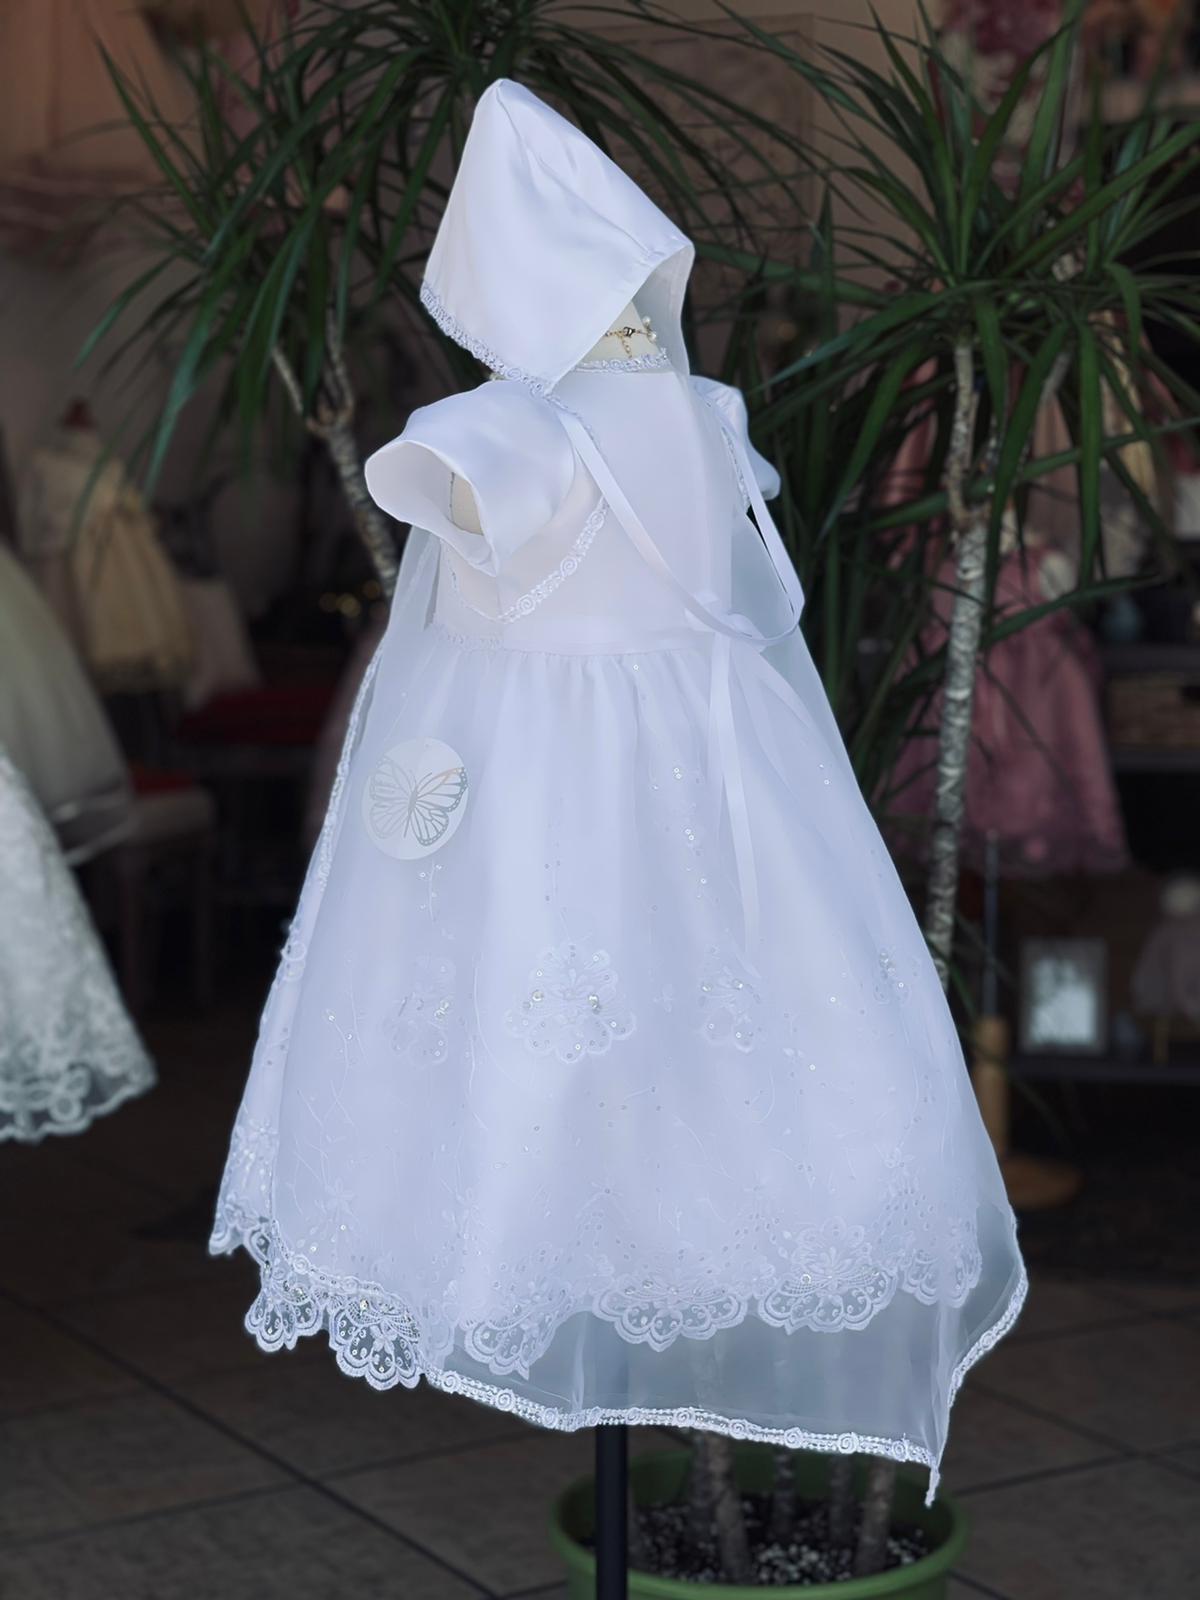 Florentine's Baptism Dress